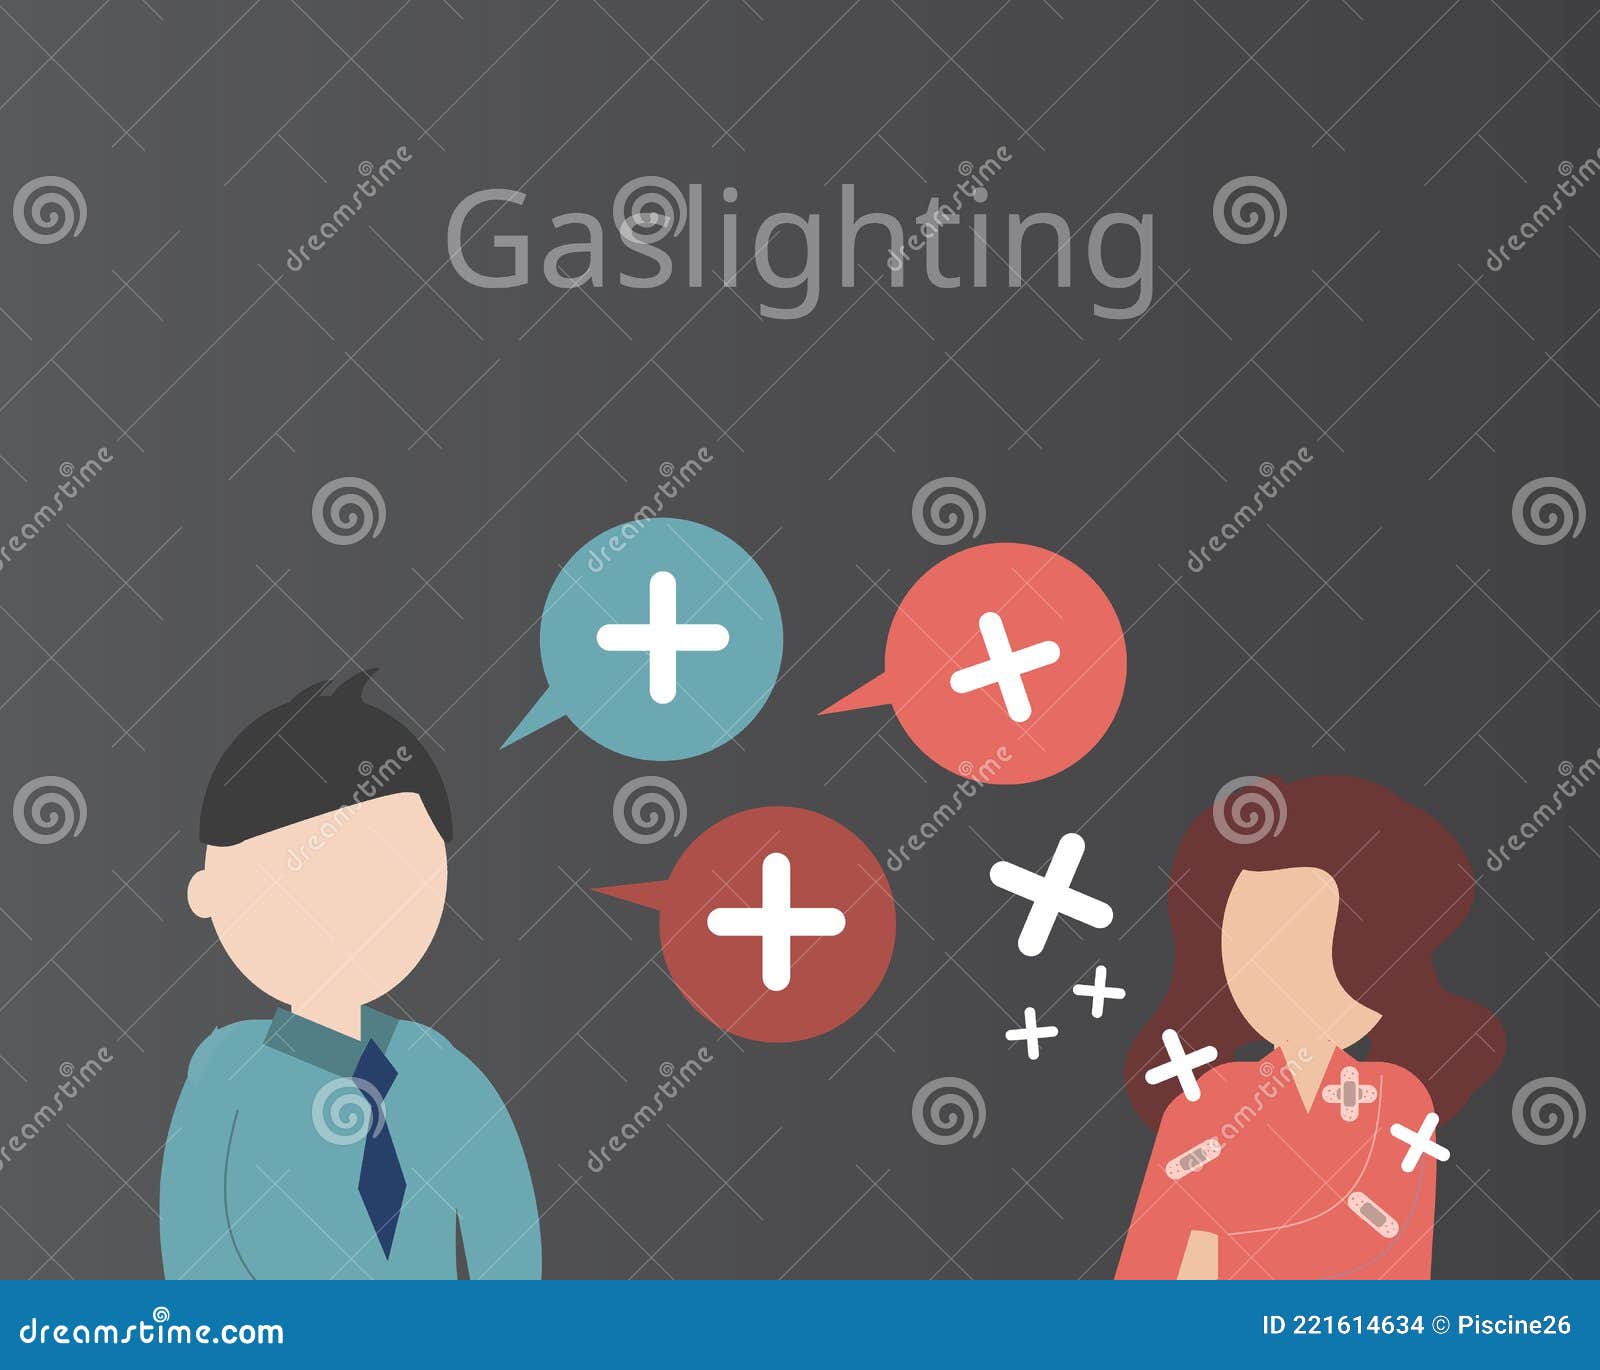 Opfer gaslighting 6 Gaslighting